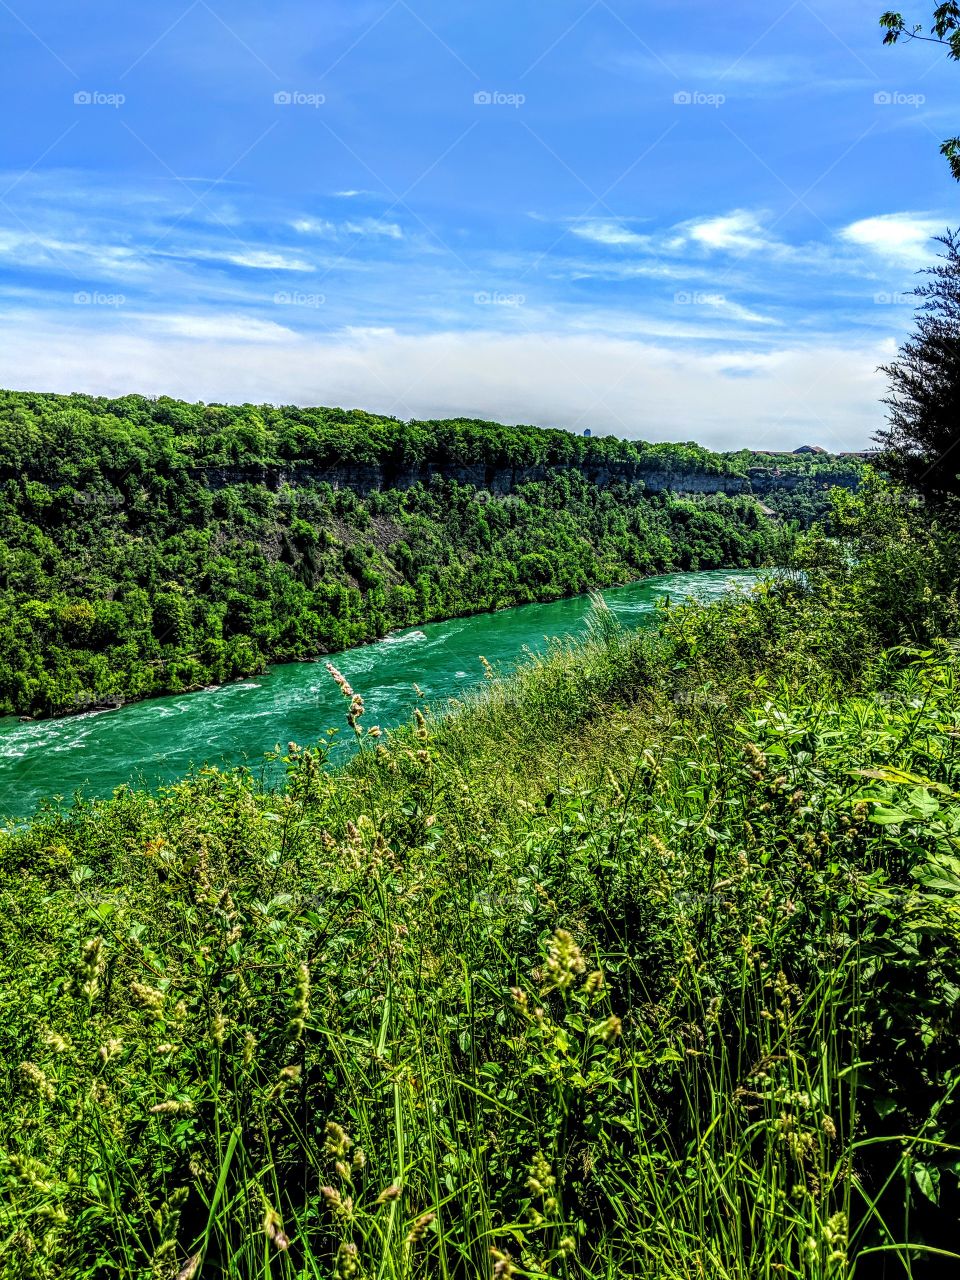 River in Niagara falls